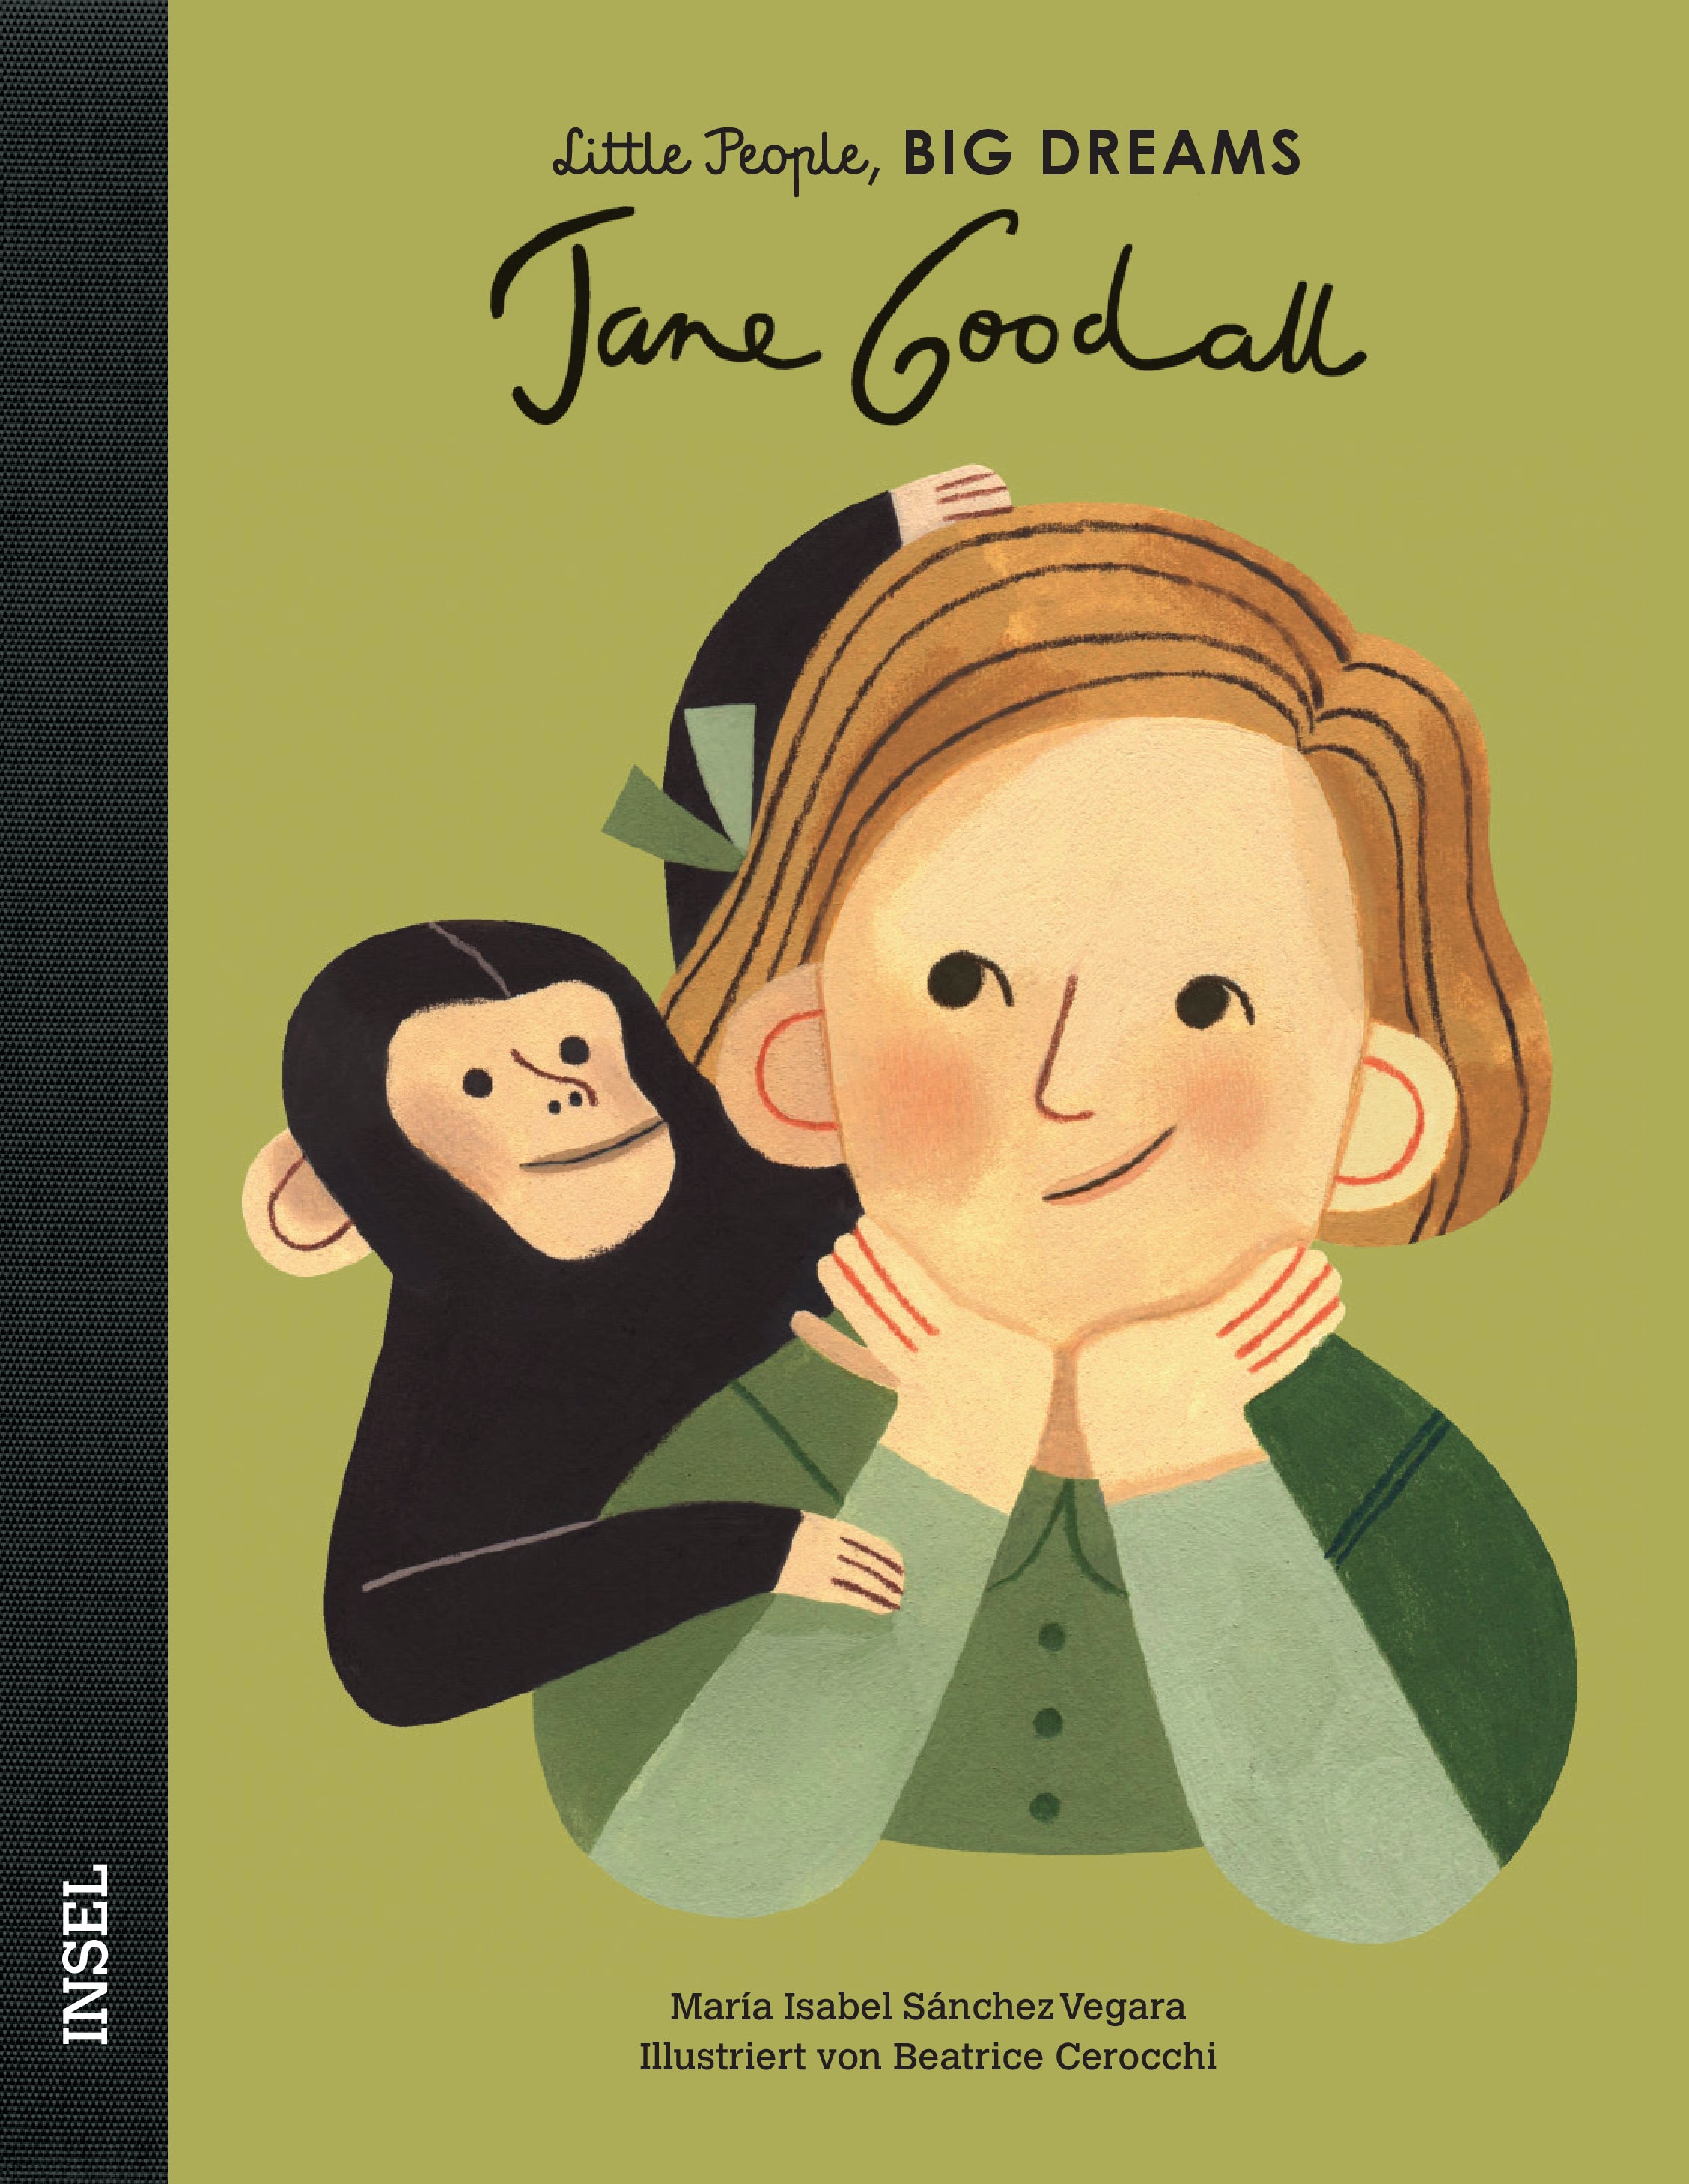 Little People - Jane Goodall